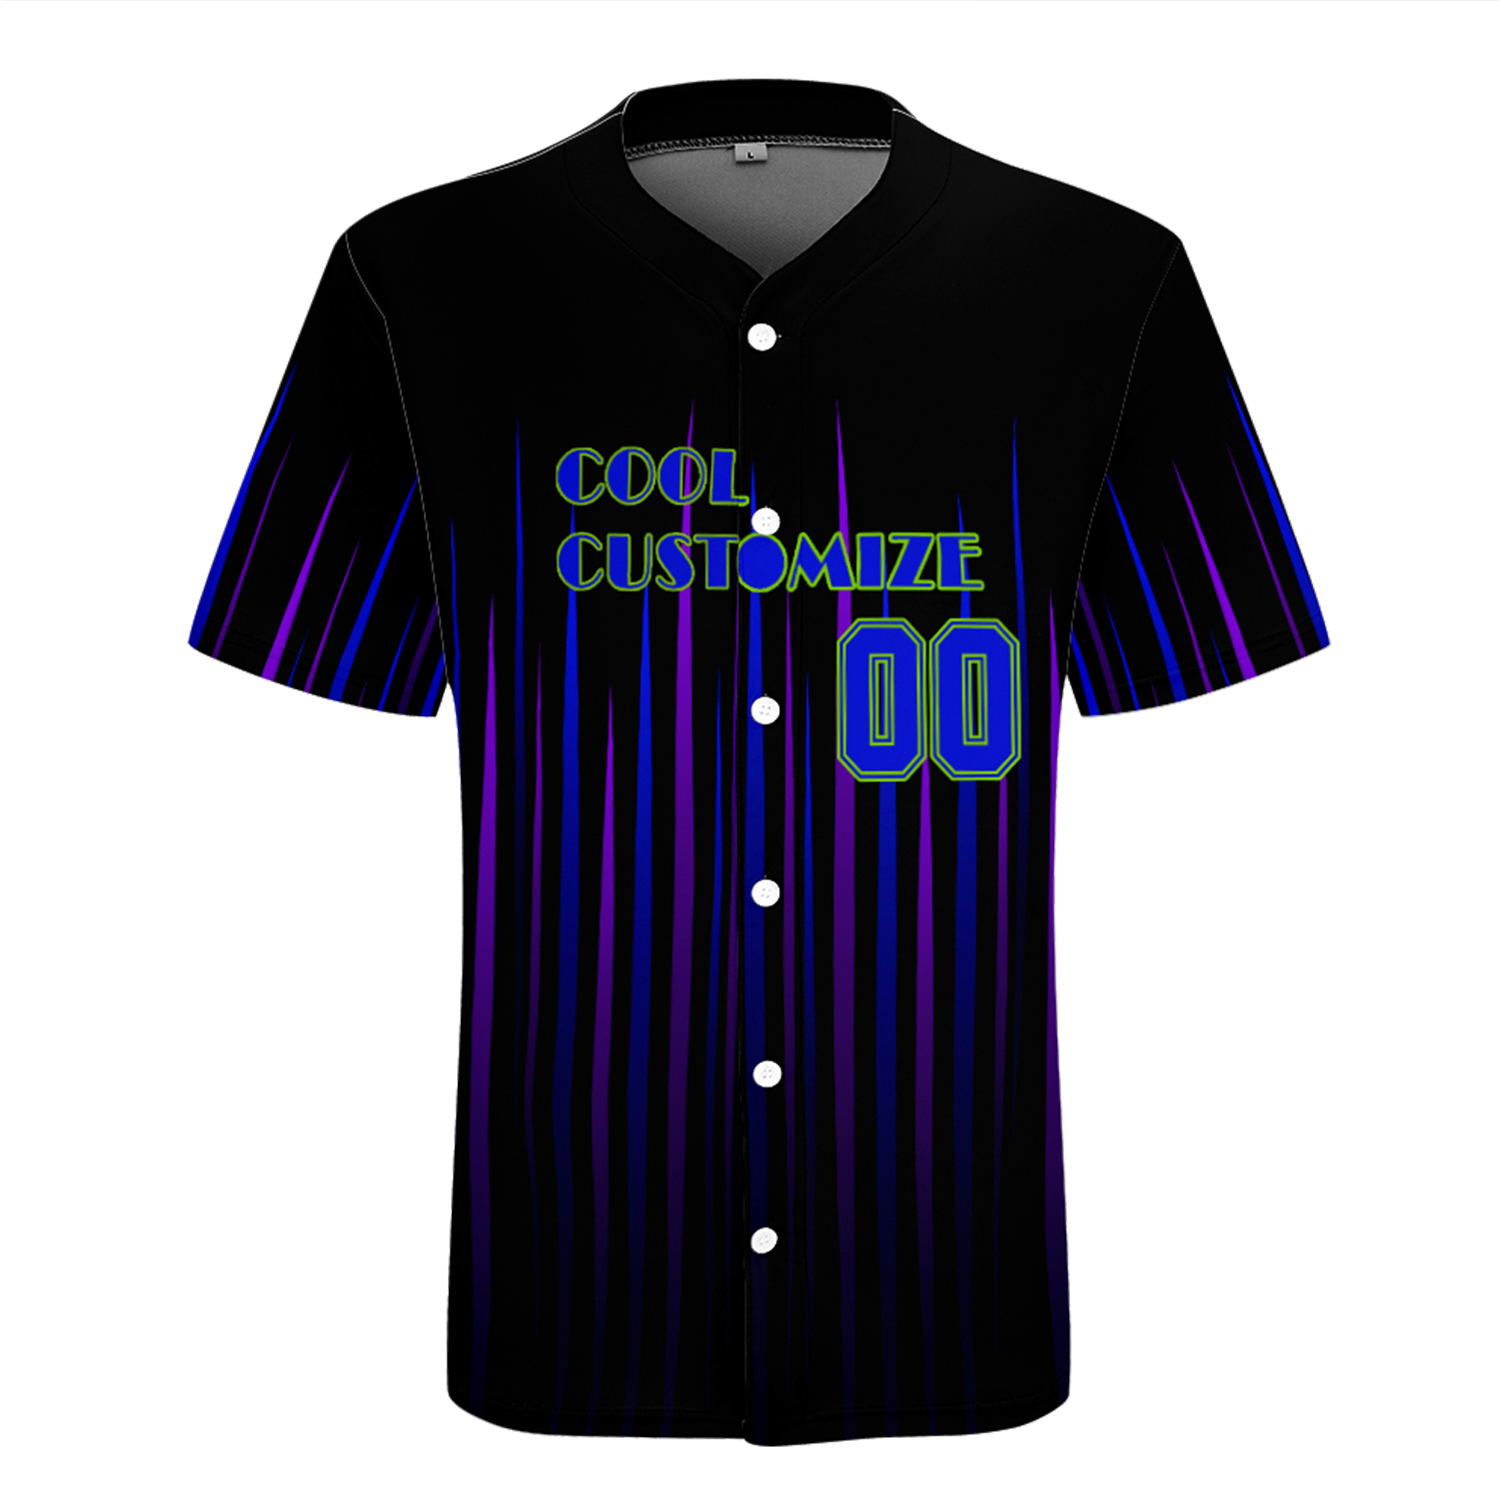 factory-custom-baseball-shirt-personalized-design-jerseys-oem-print-on-demand-baseball-suits-5